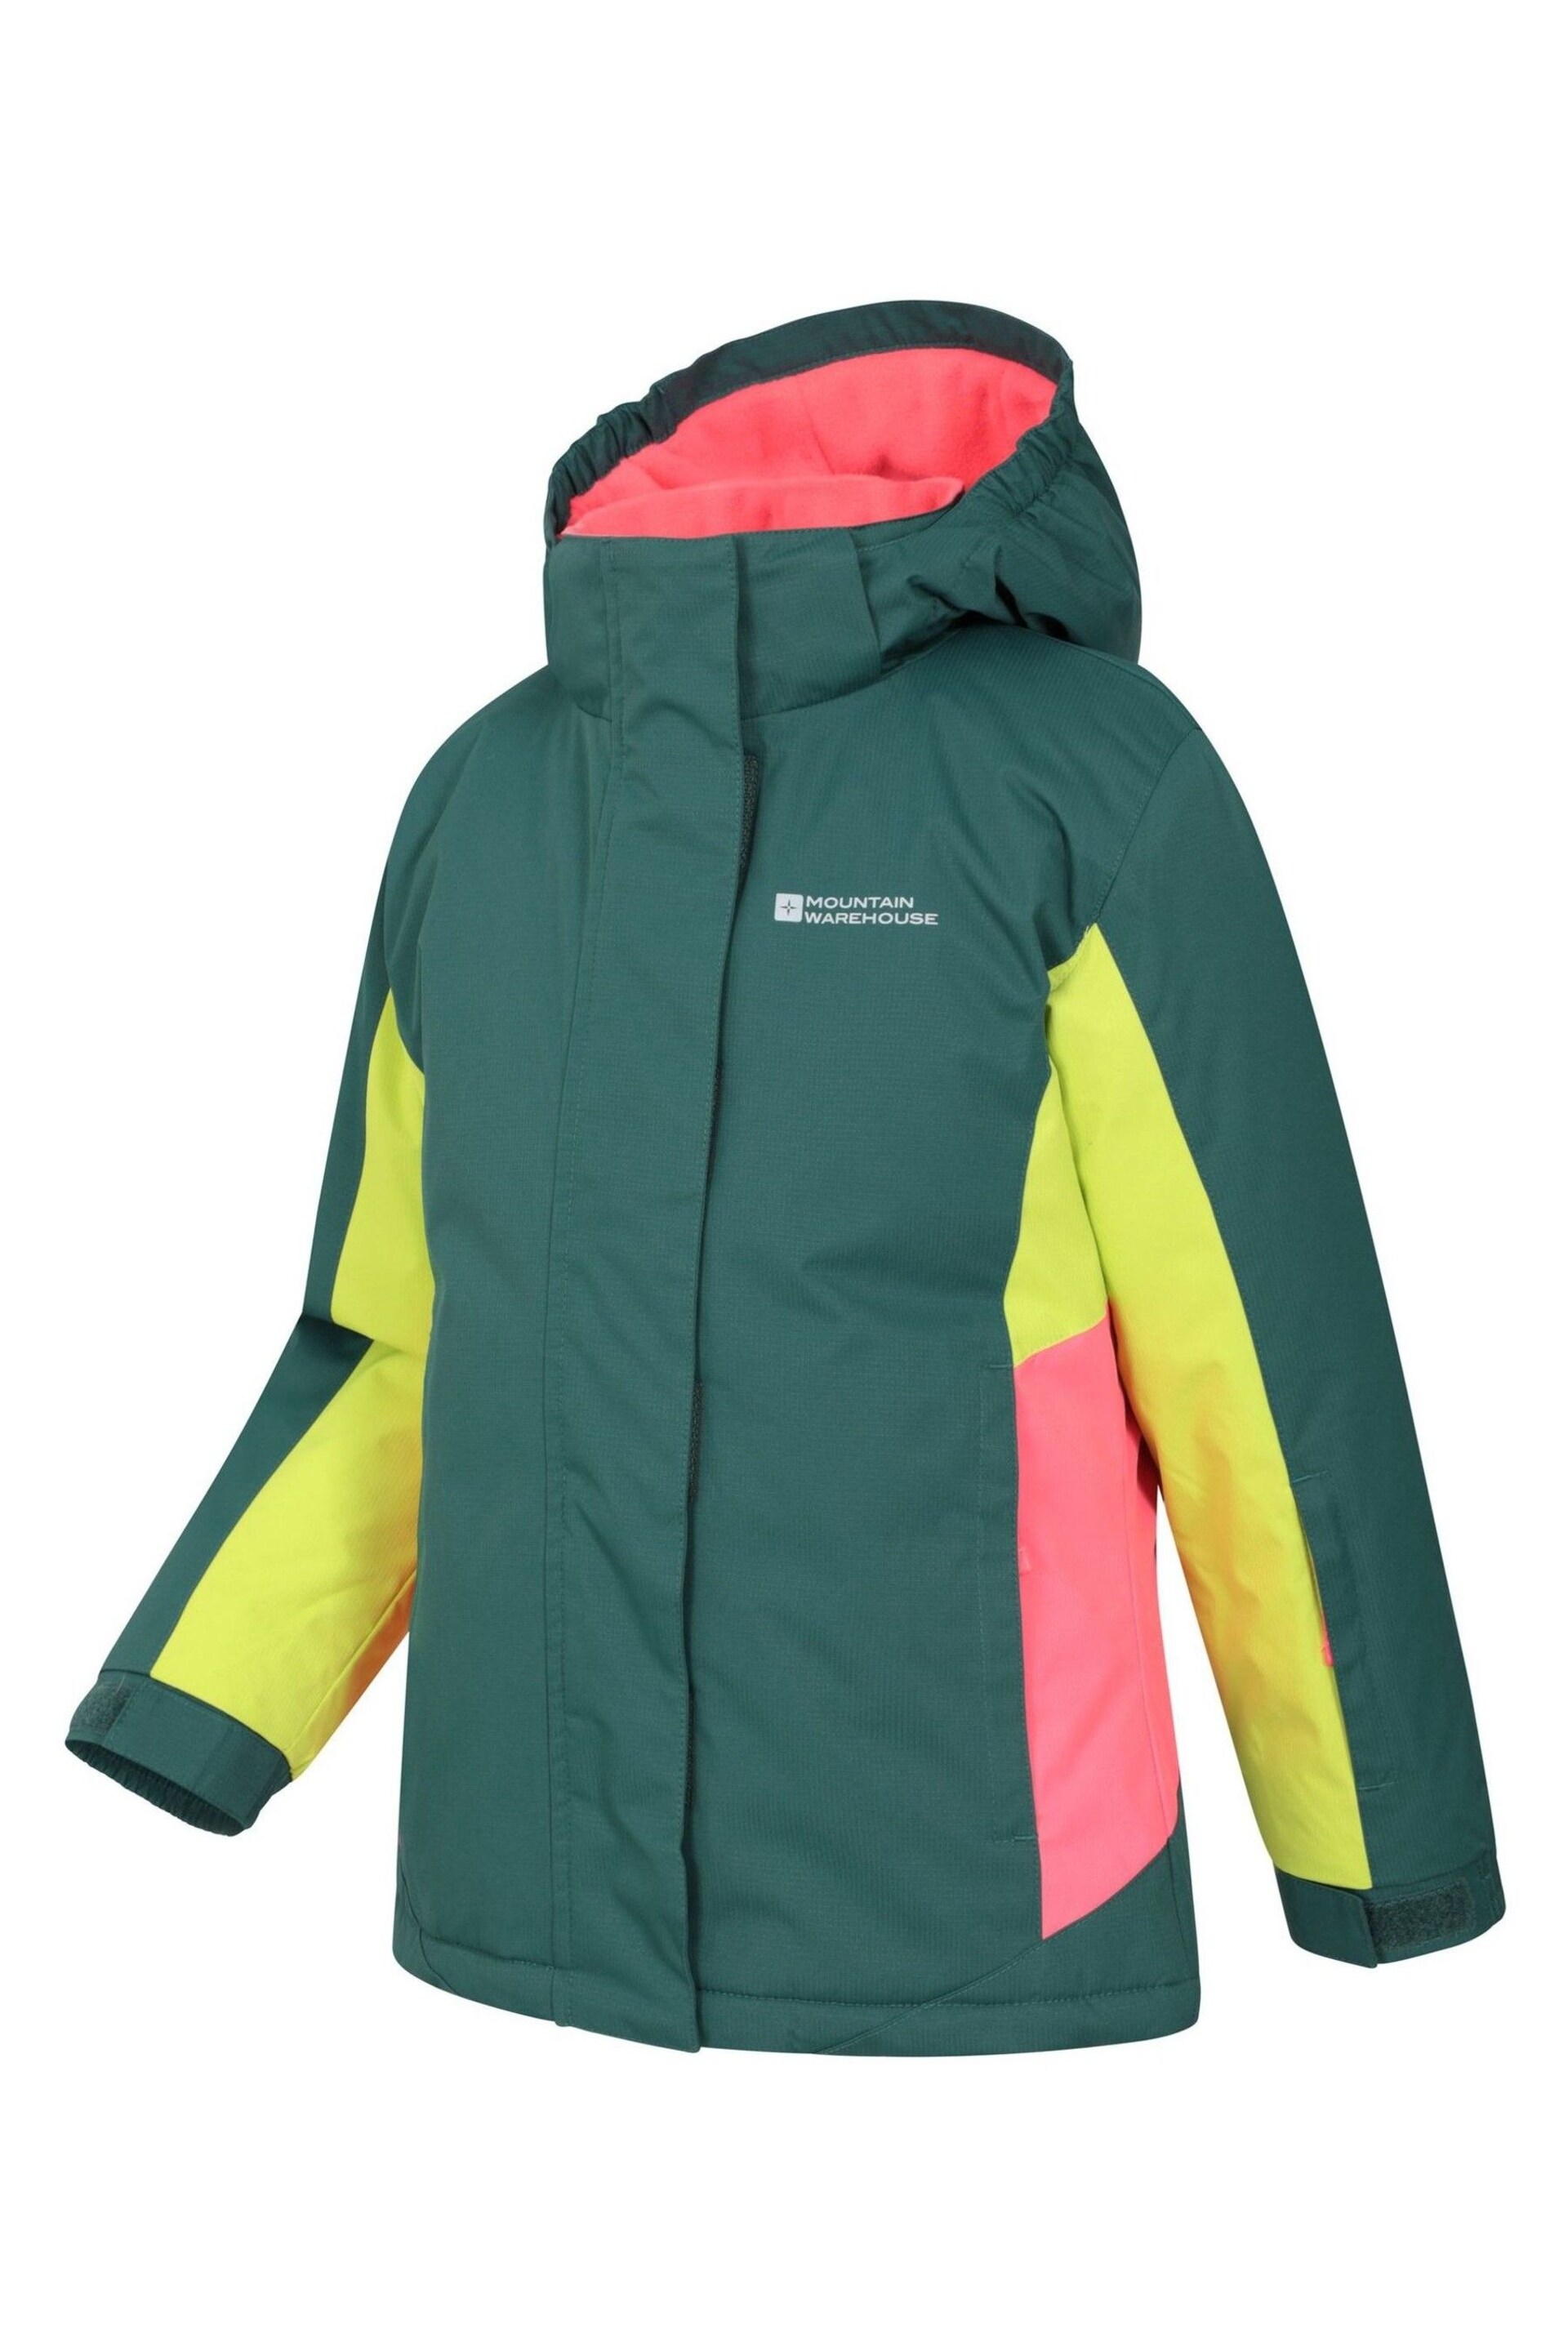 Mountain Warehouse Green Honey Ski Jacket - Kids - Image 3 of 4